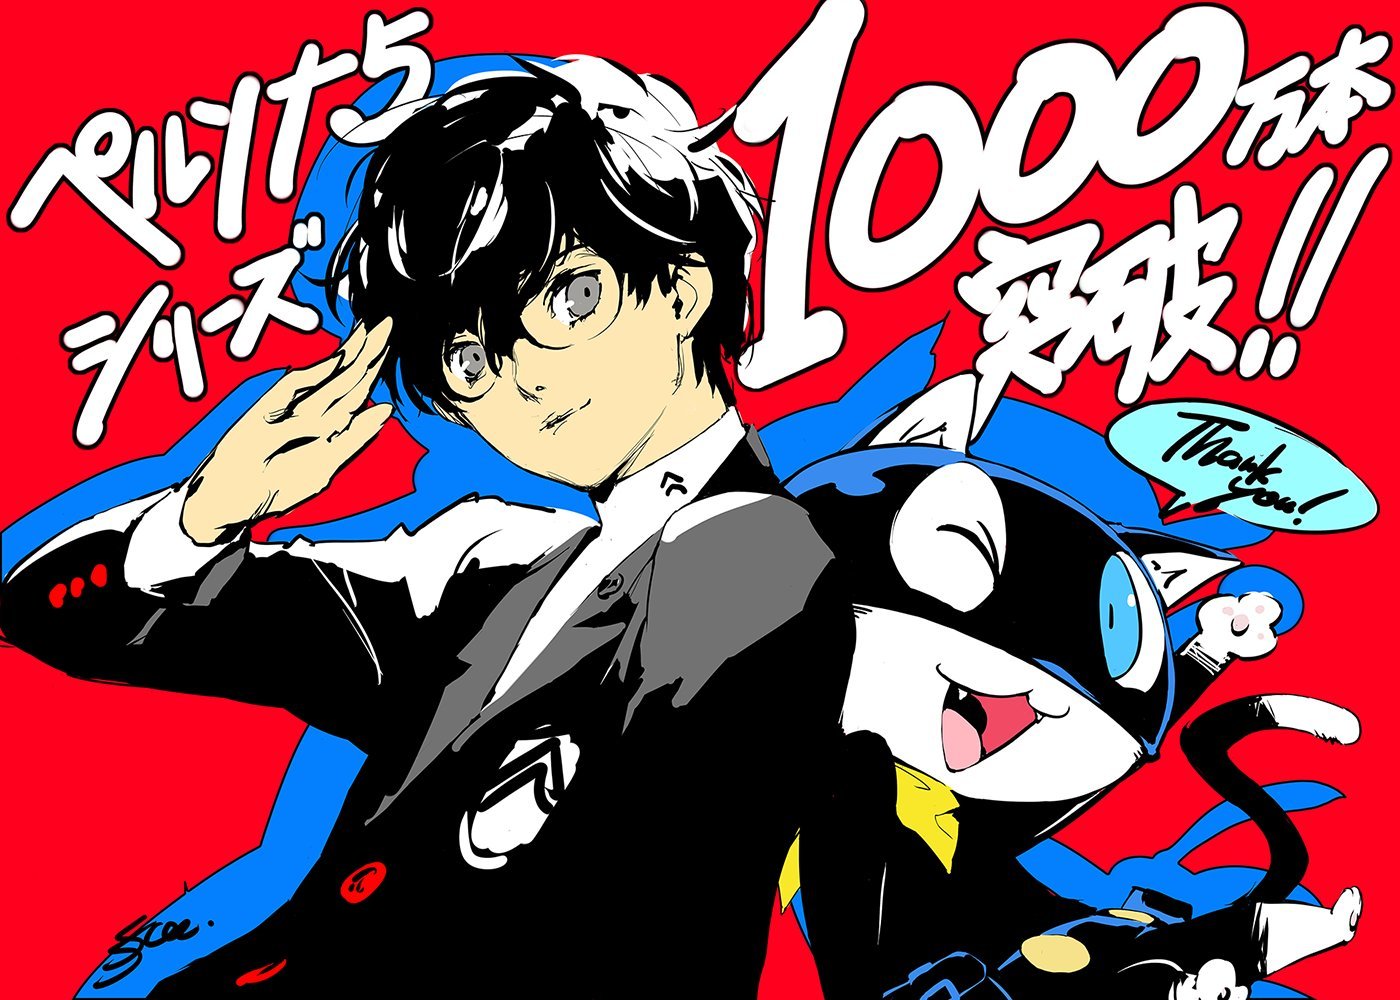 Persona 5 series sales top 10 million - Gematsu